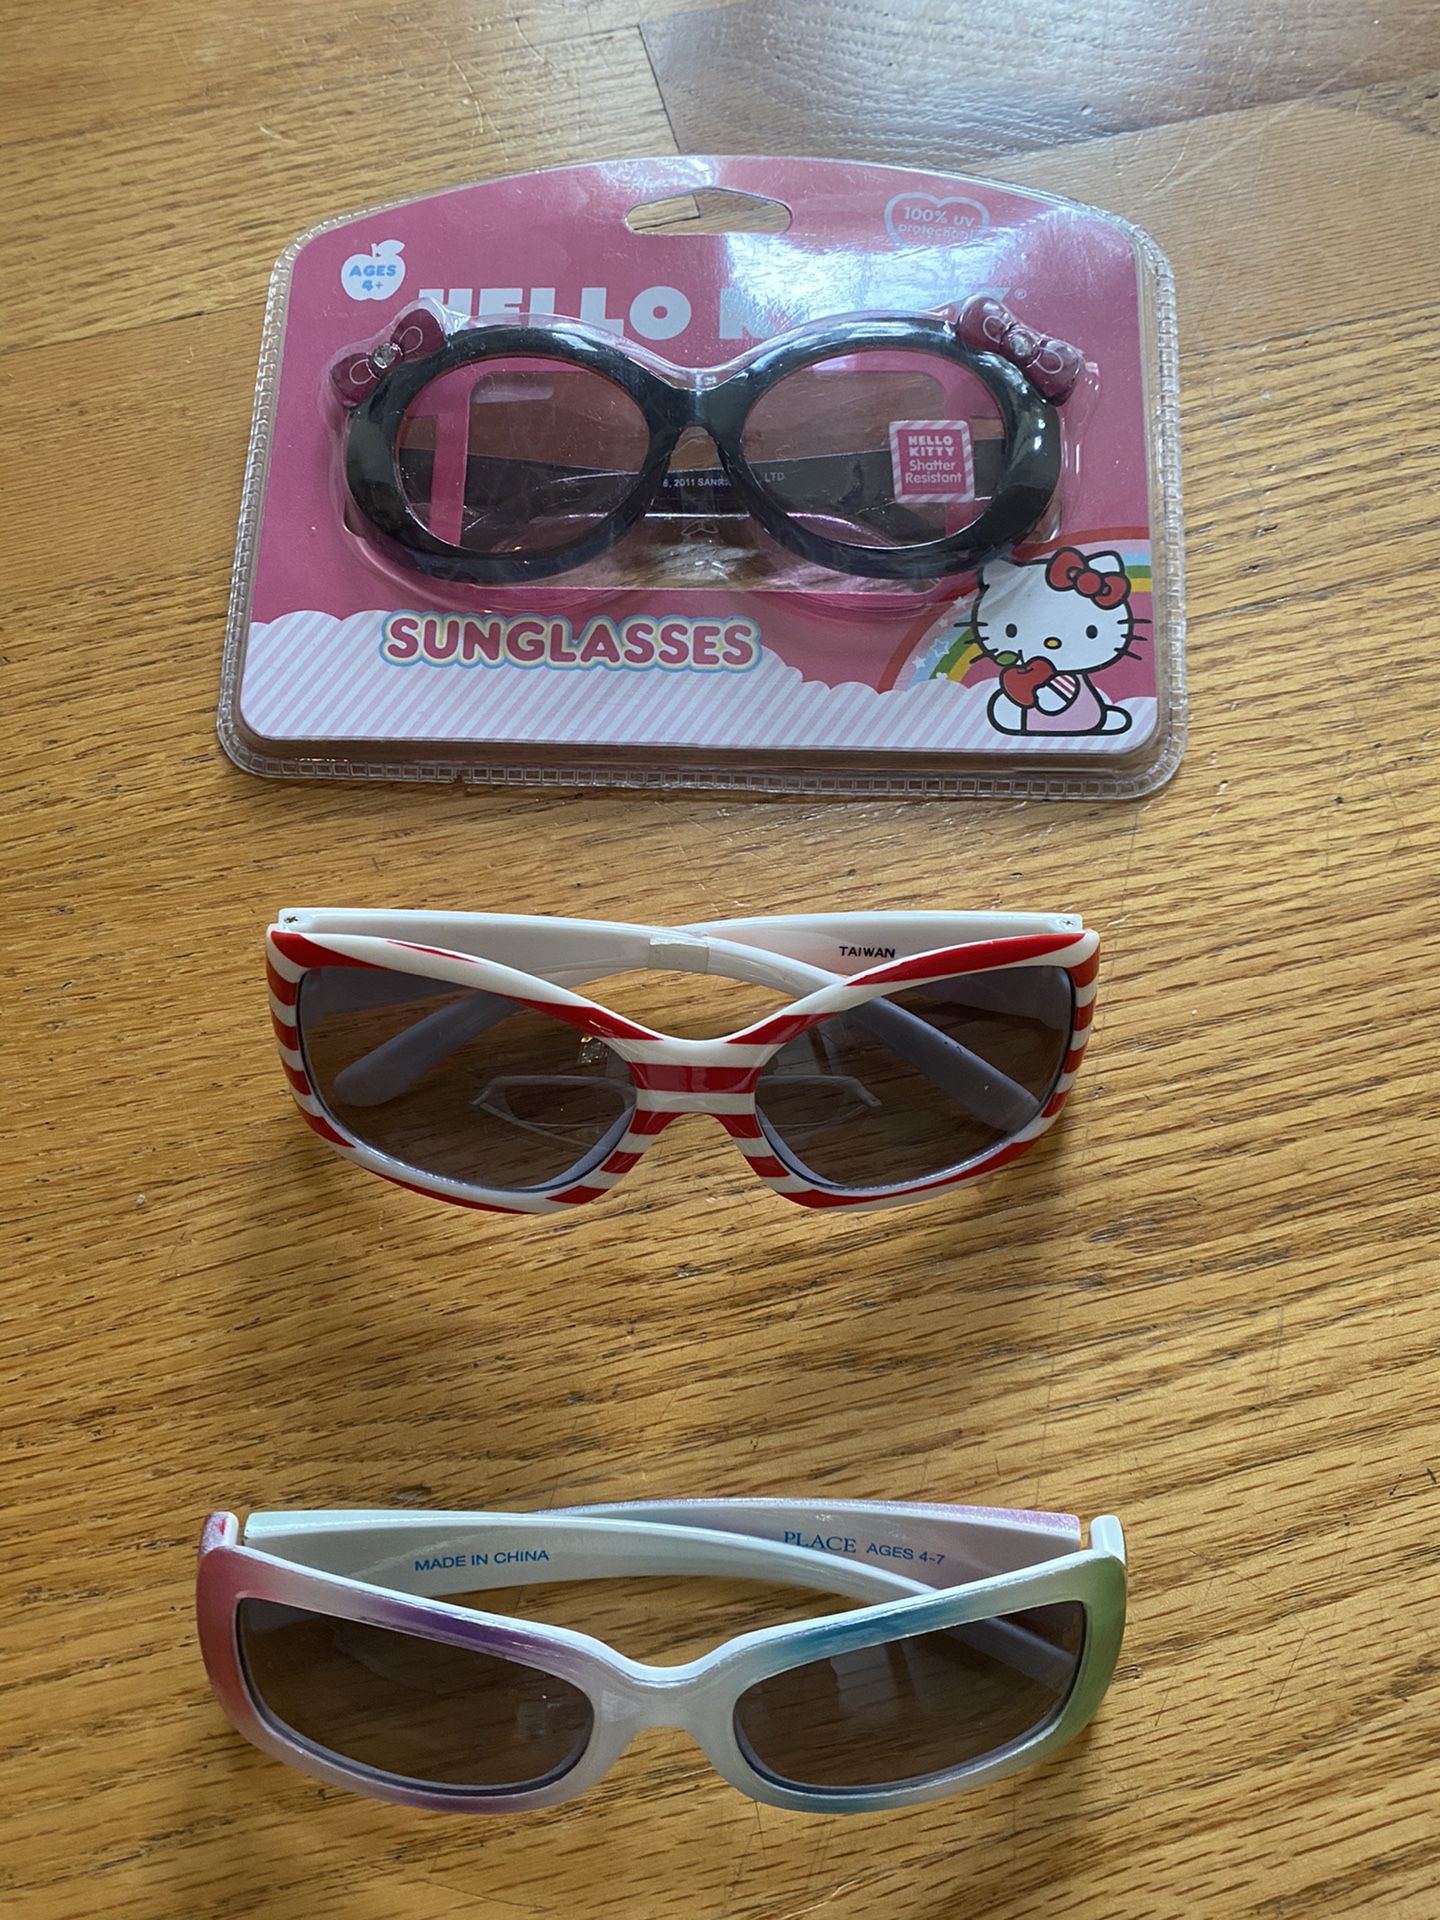 3 pairs of little girl sunglasses